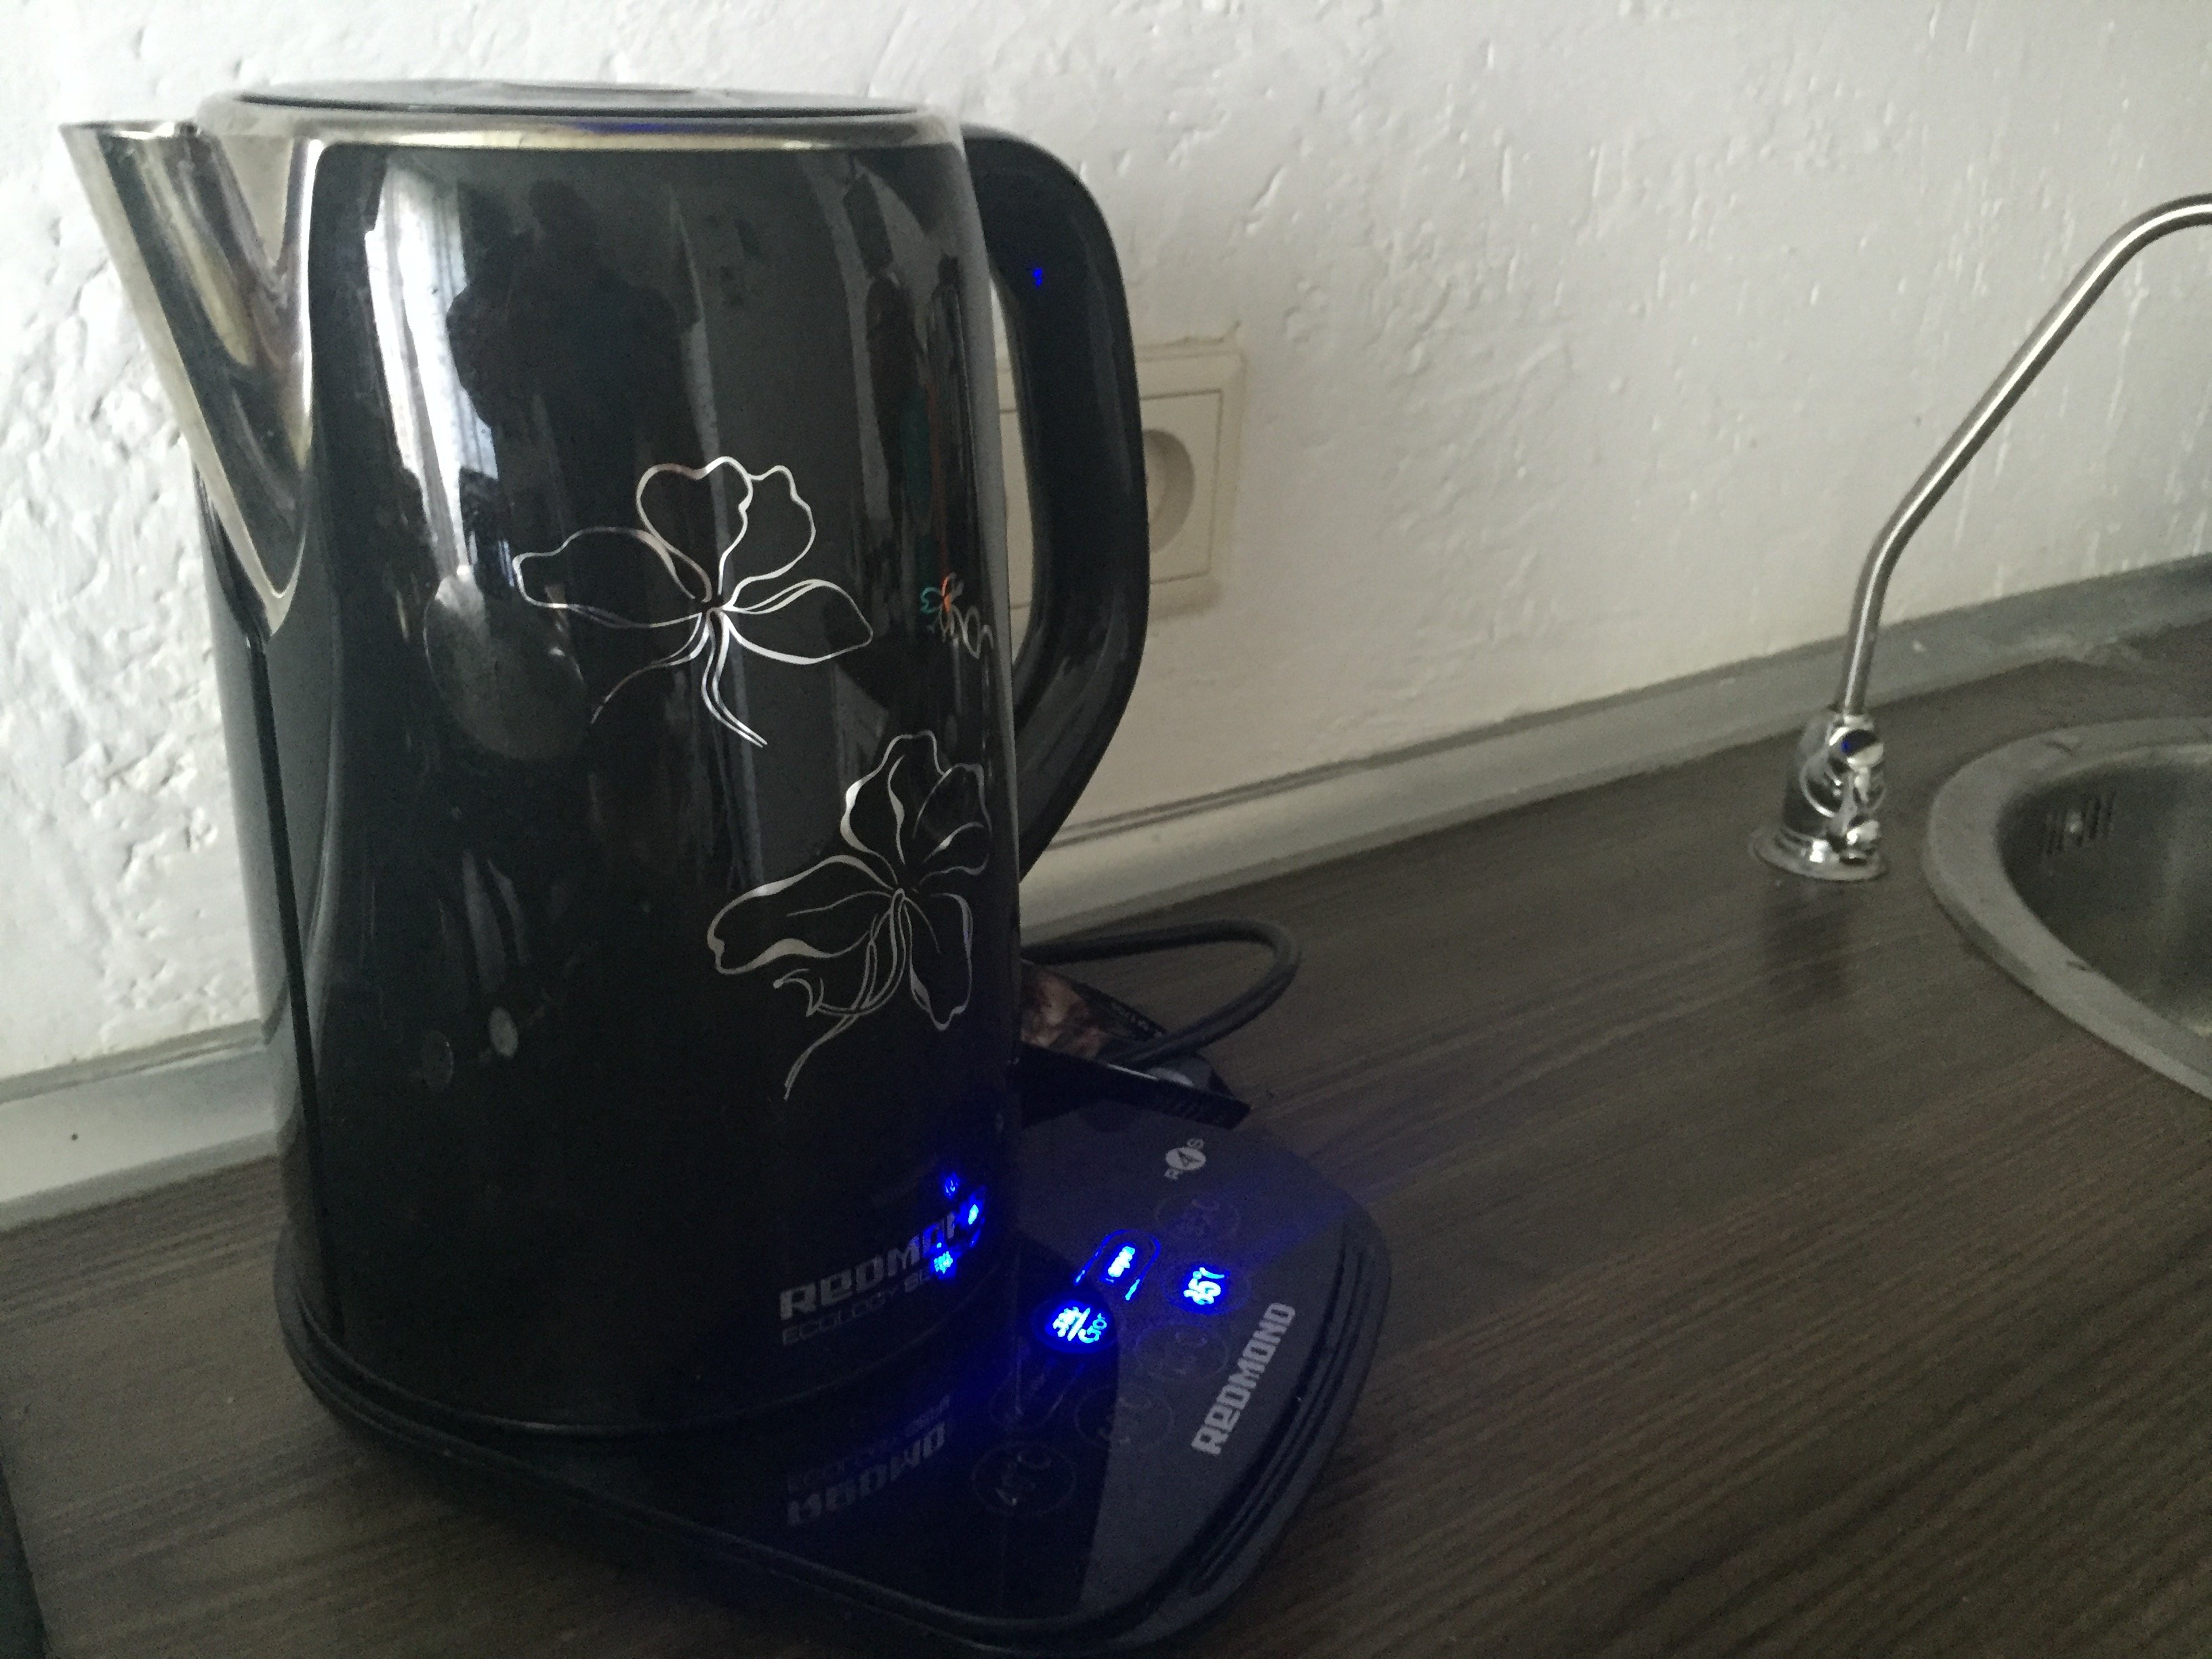 redmond smart teapot smart home умный дом редмонд техника обзор review